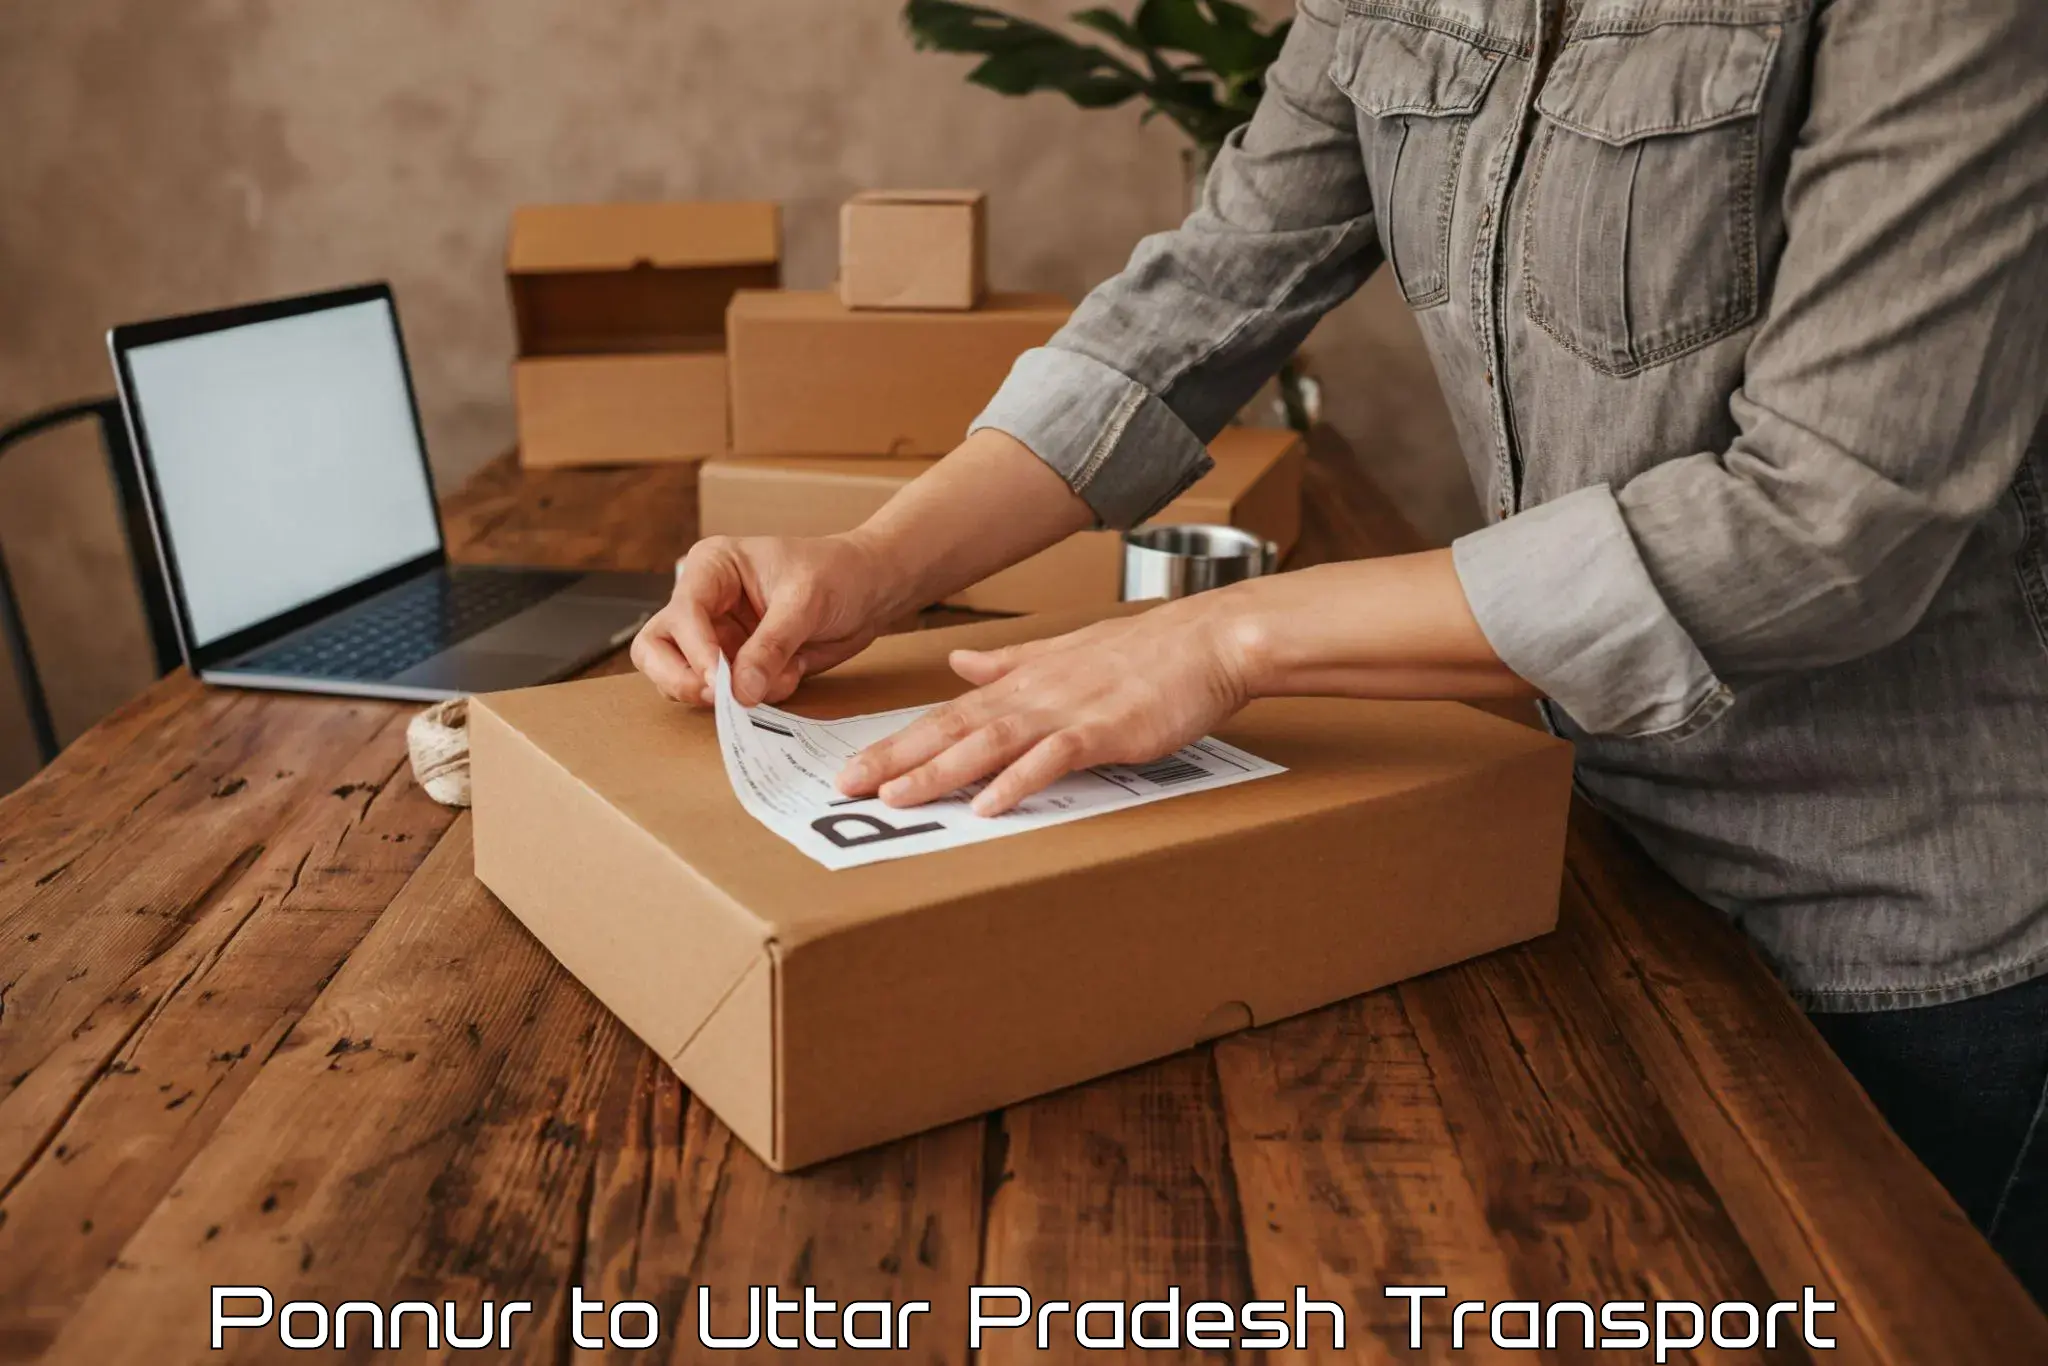 Online transport service Ponnur to Koraon